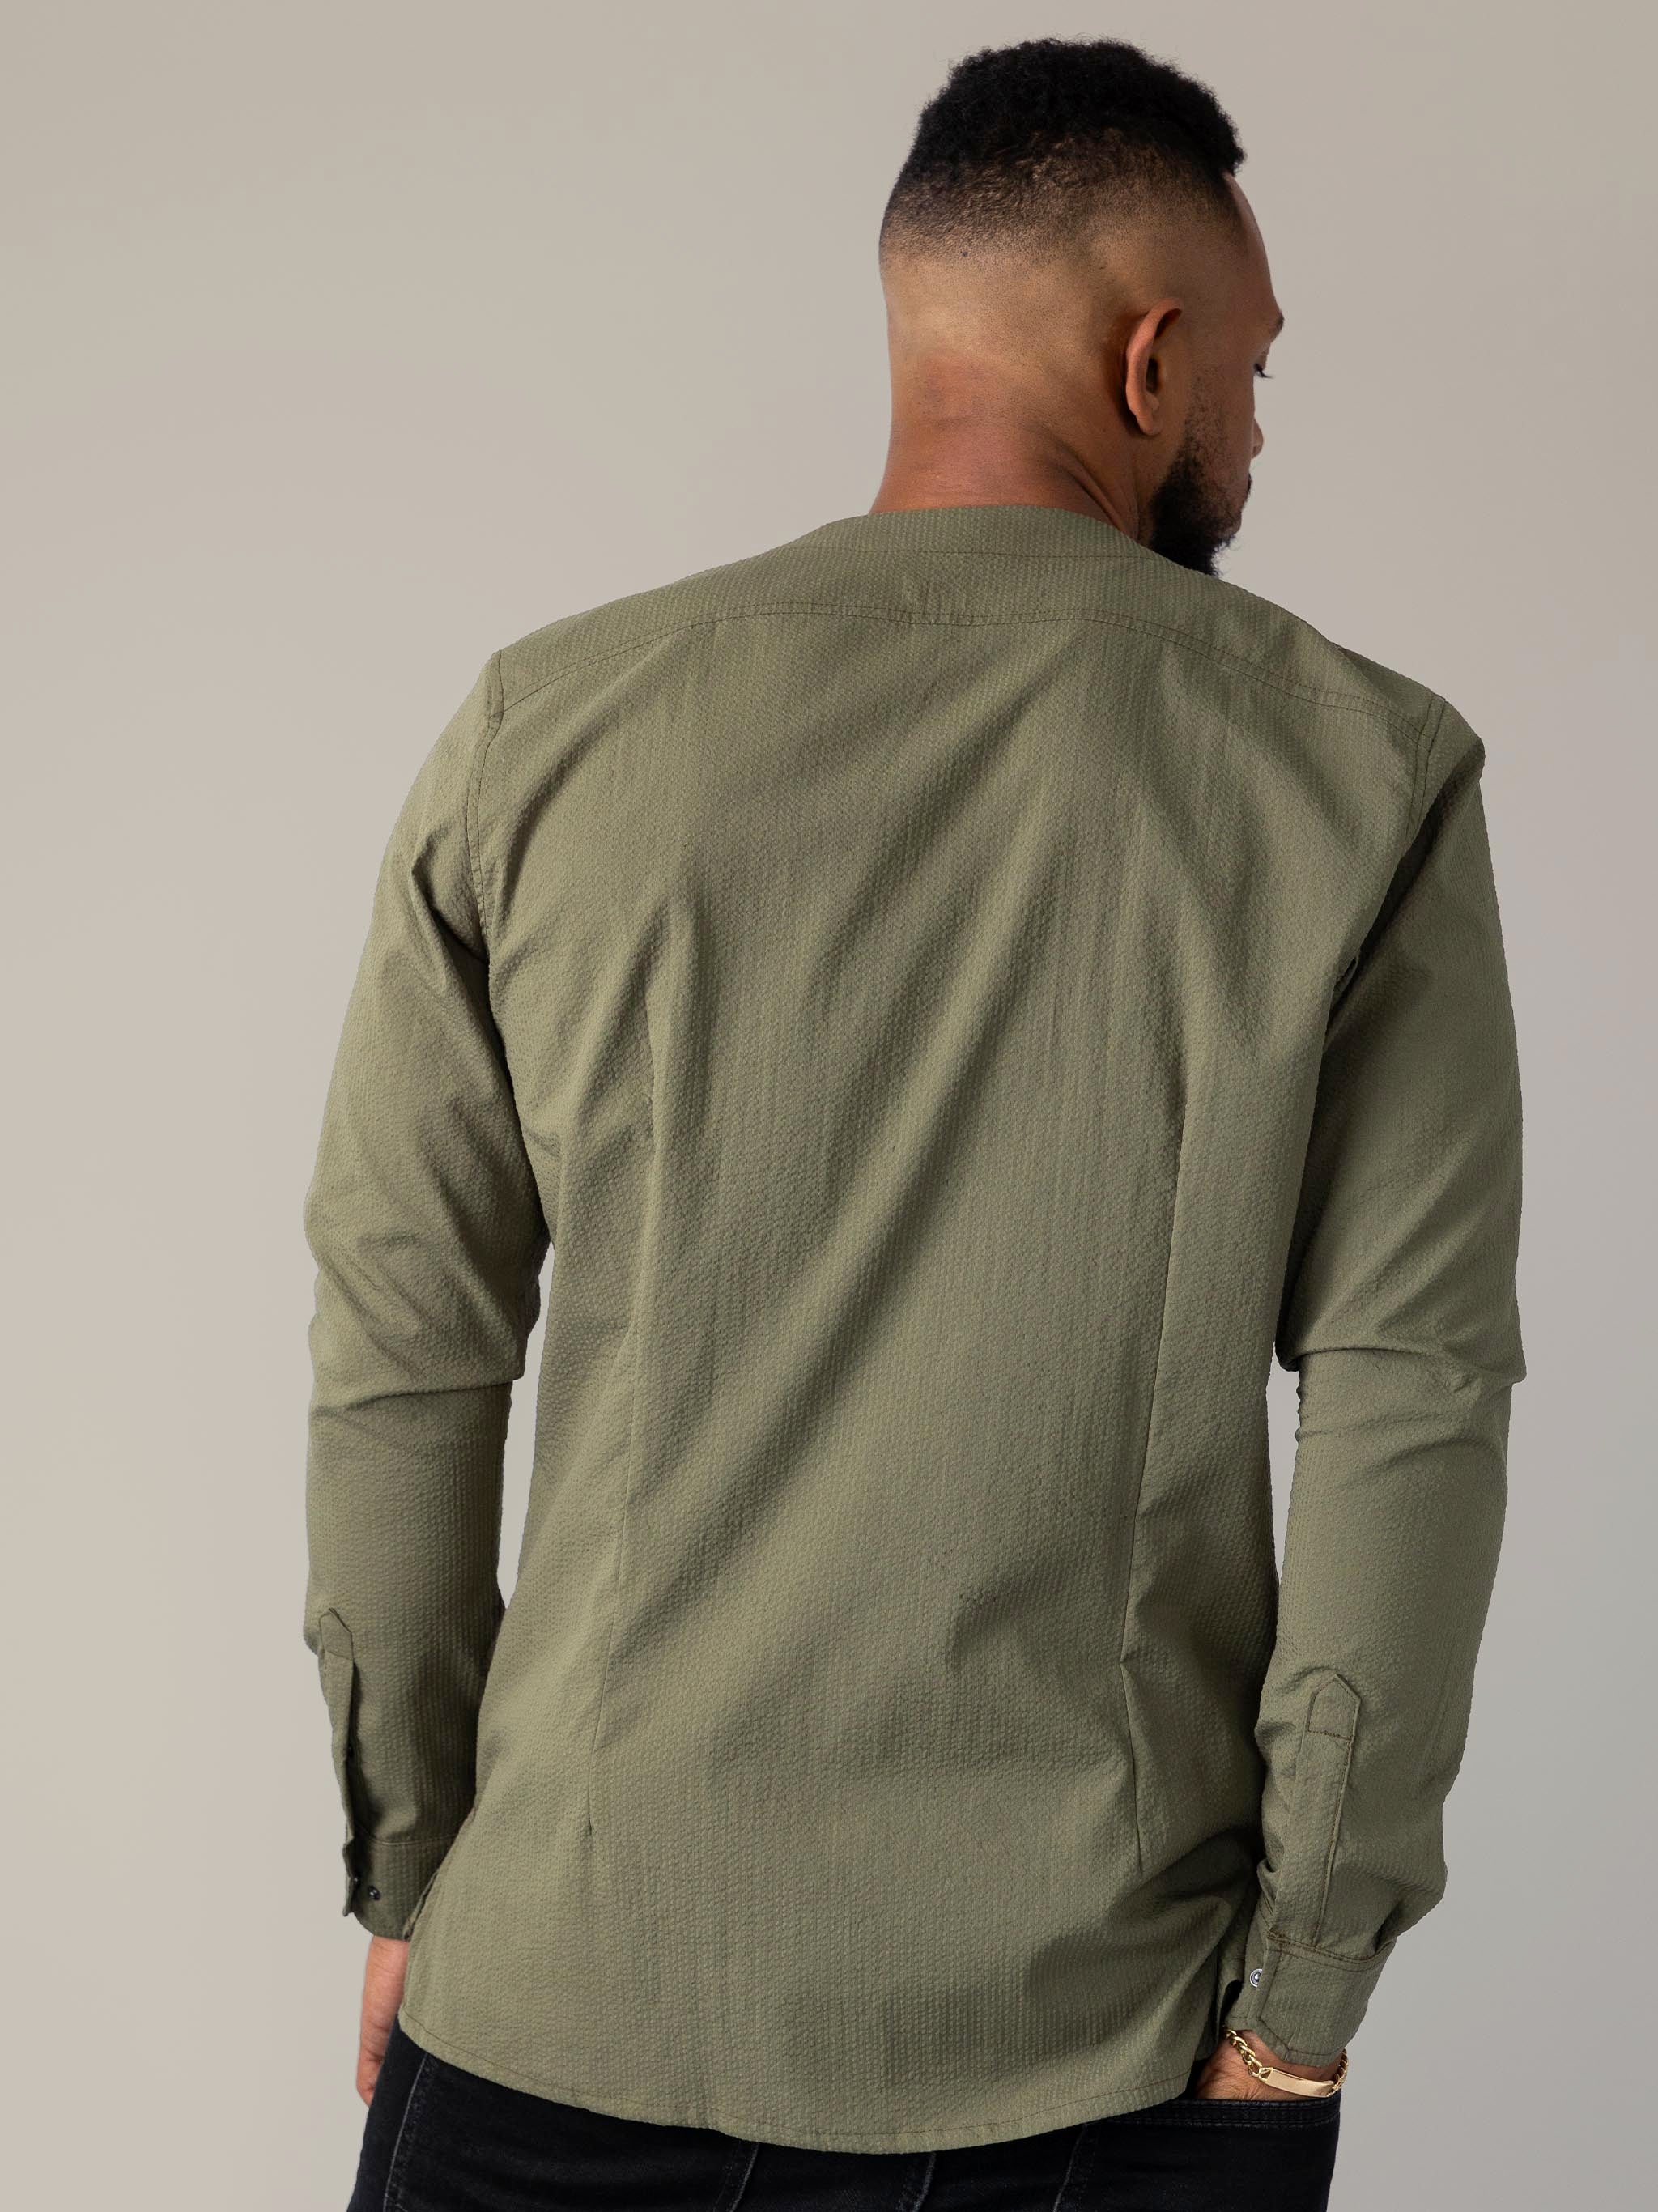 SeerTech™ Collarless Long Sleeve - Khaki (Recycled)